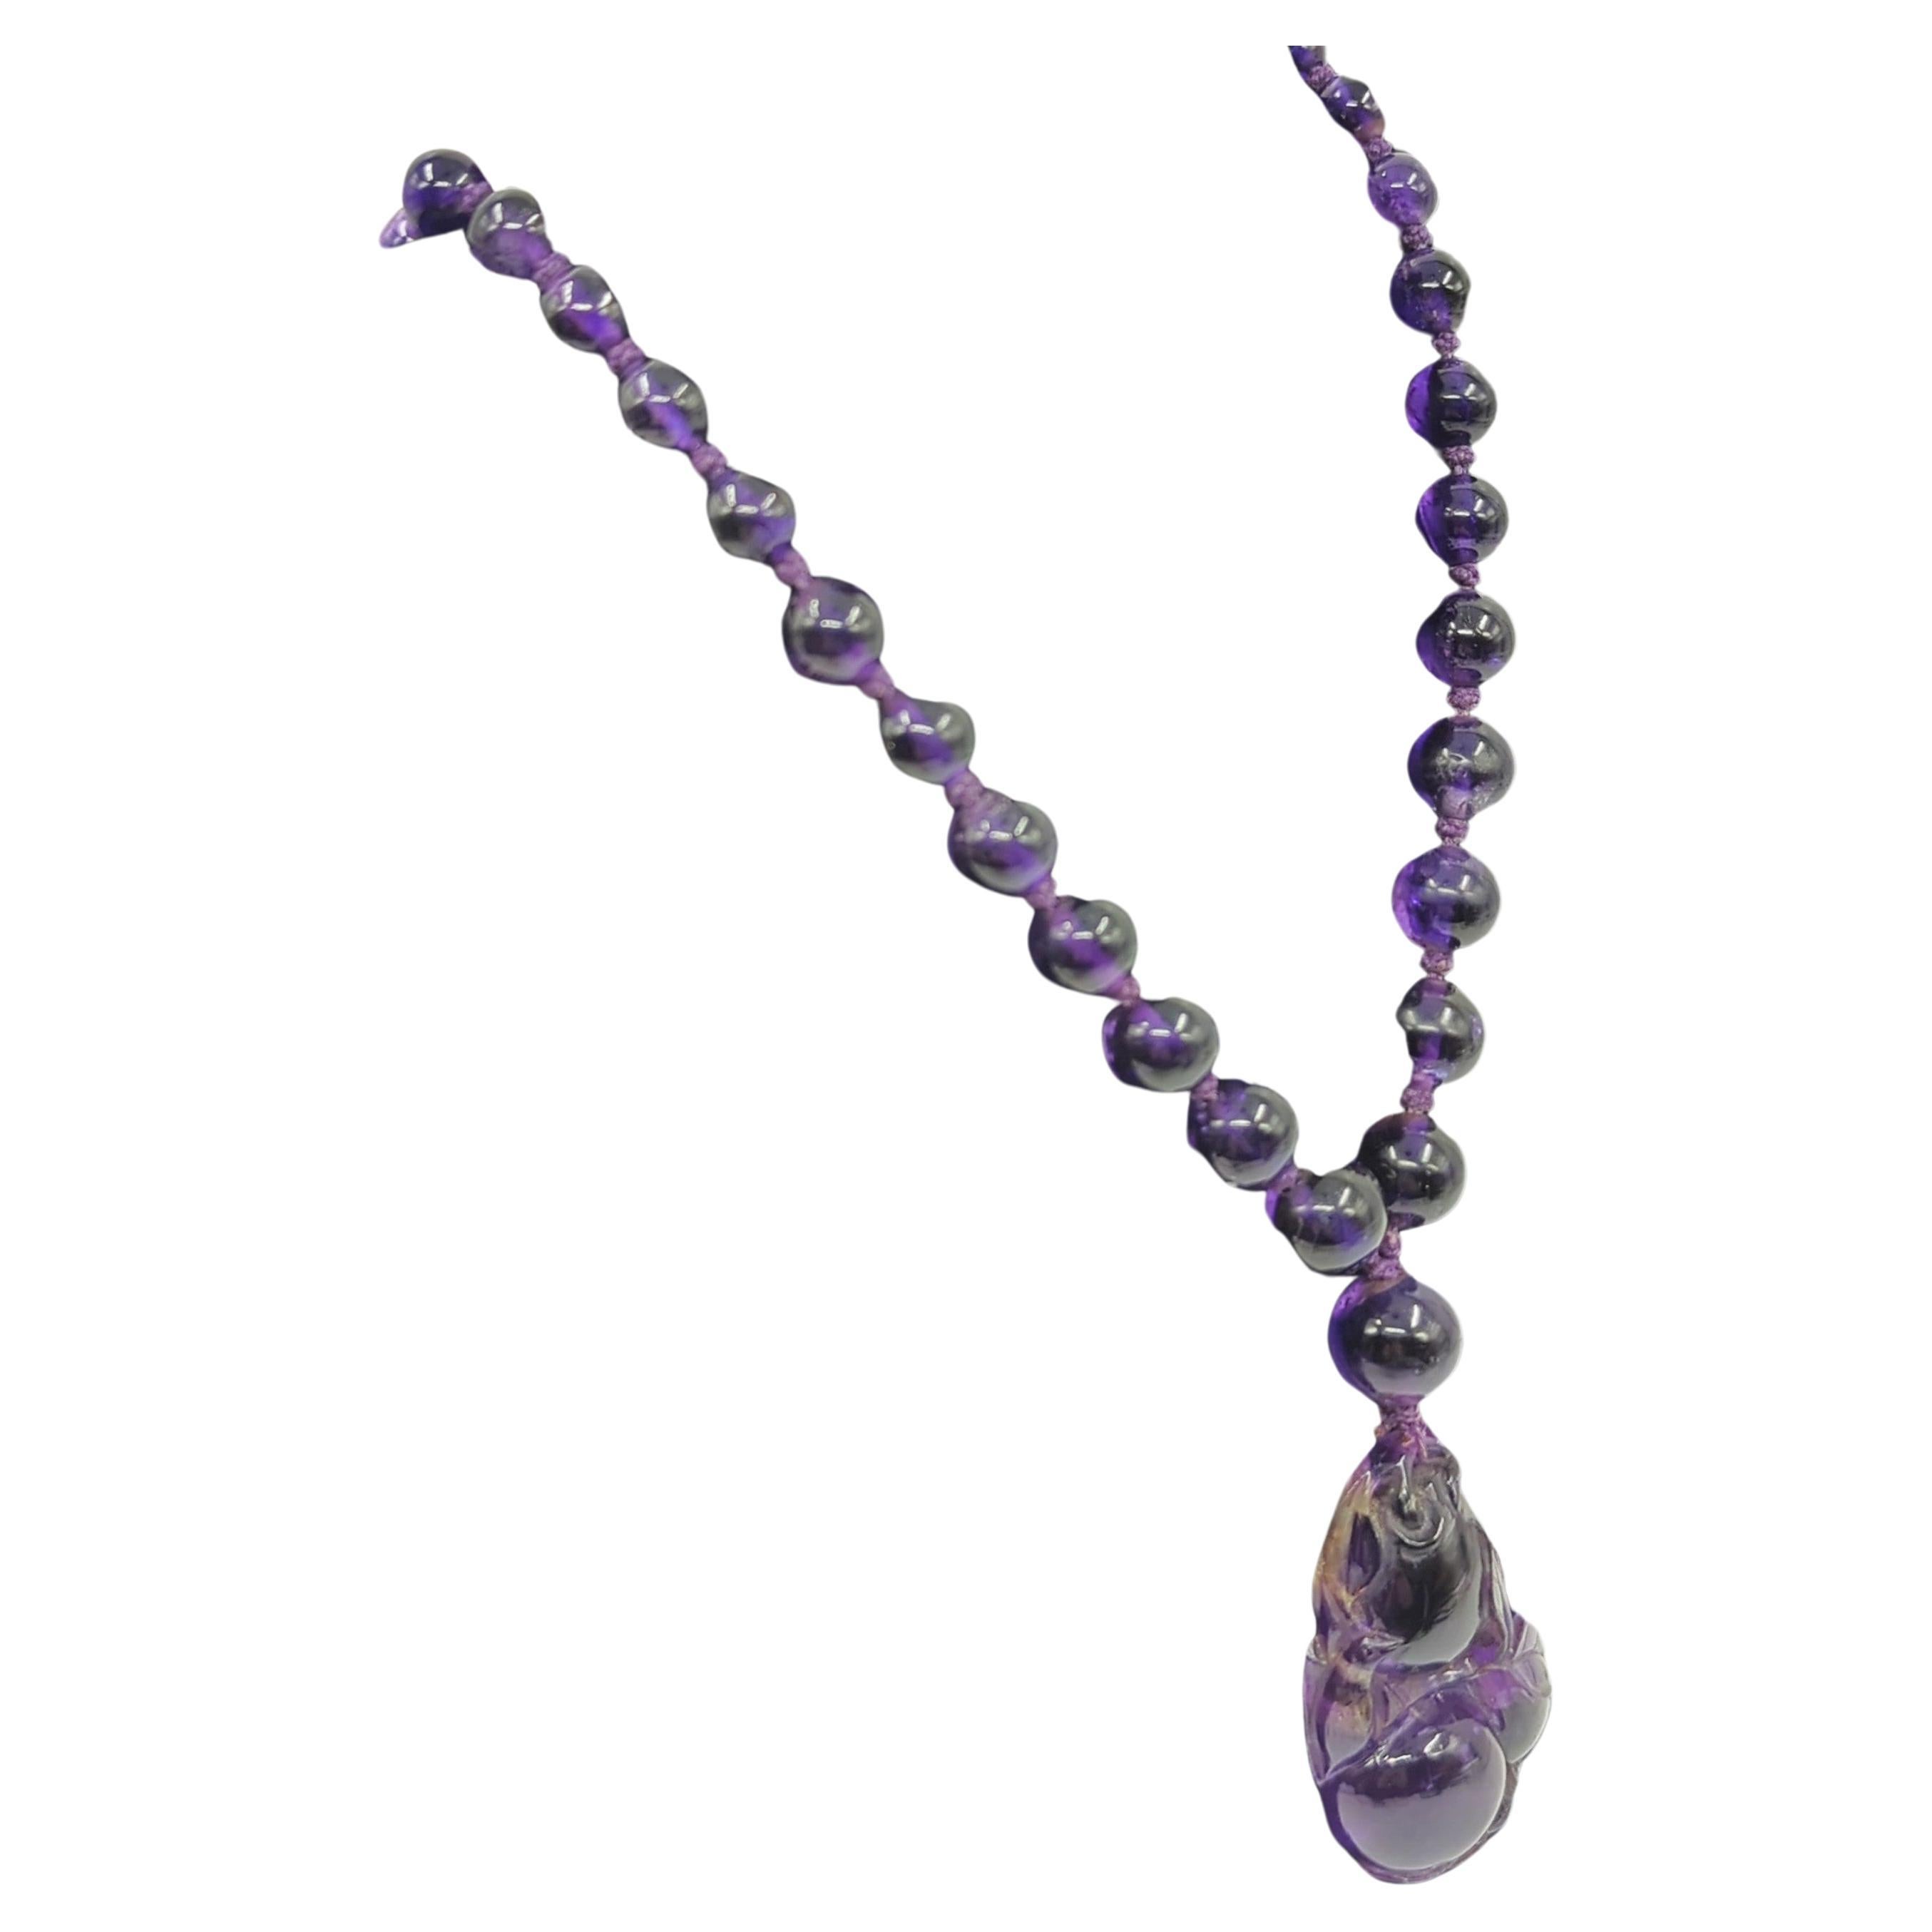 Antique Chinese Intense Purple Amethyst Pendant Graduating Beaded Necklace 24